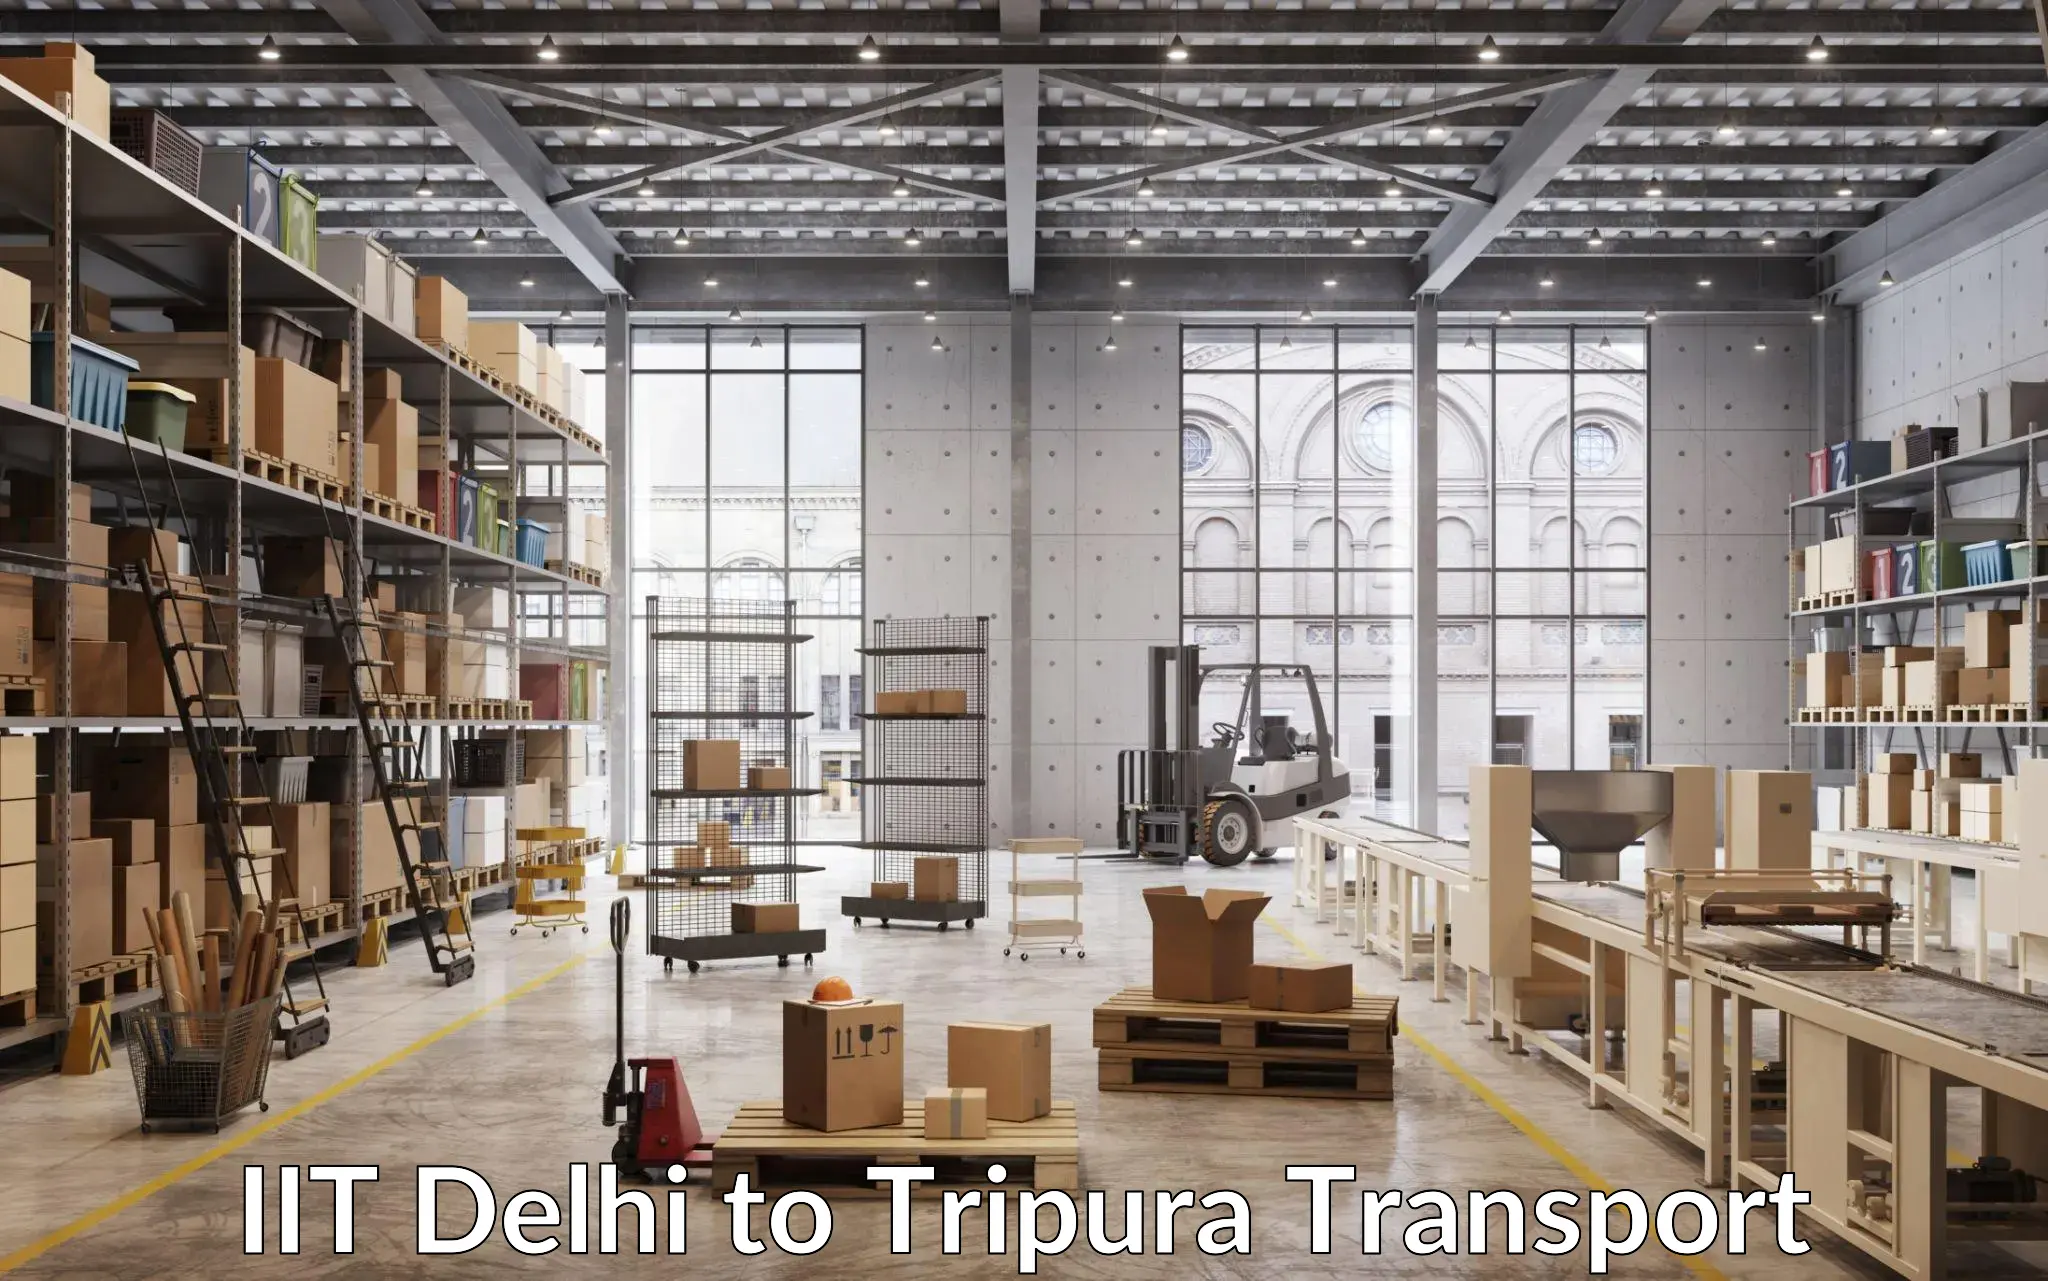 Online transport service IIT Delhi to Udaipur Tripura